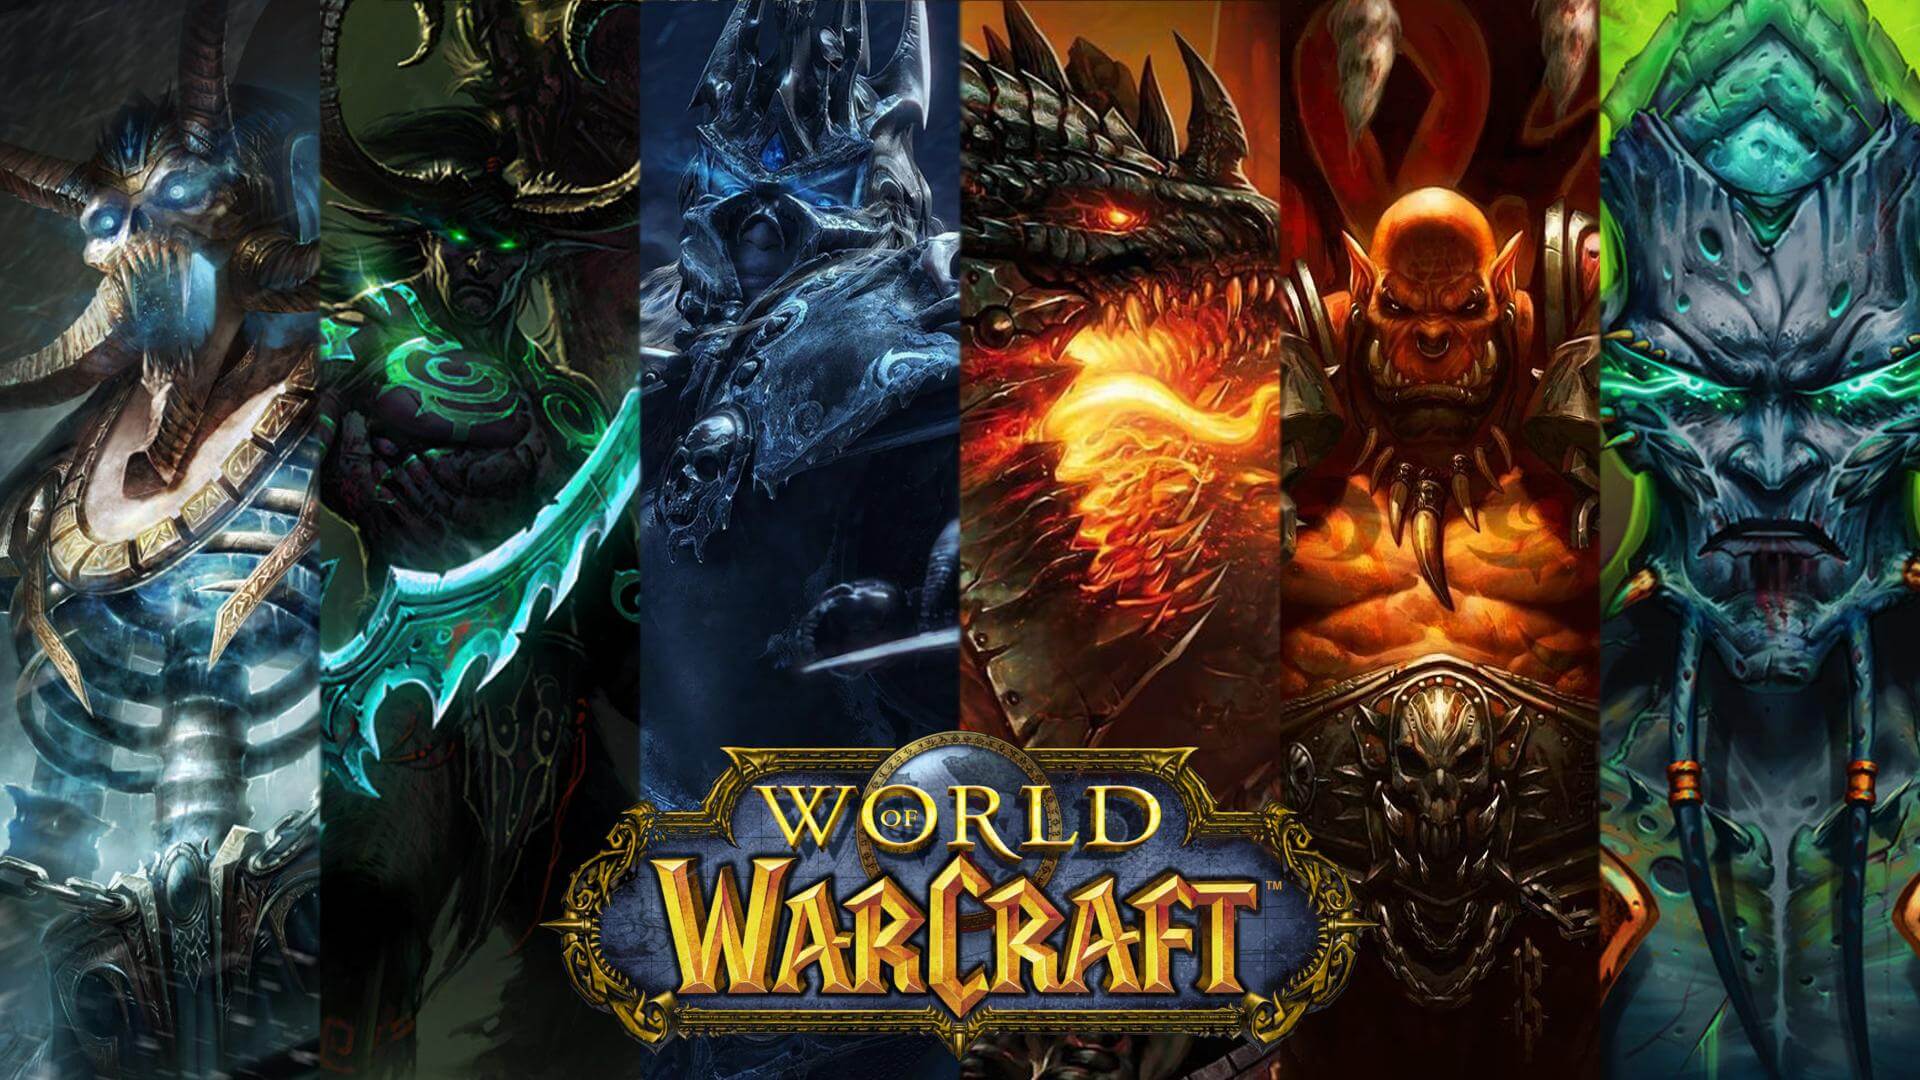 World of Warcraft backgrounds